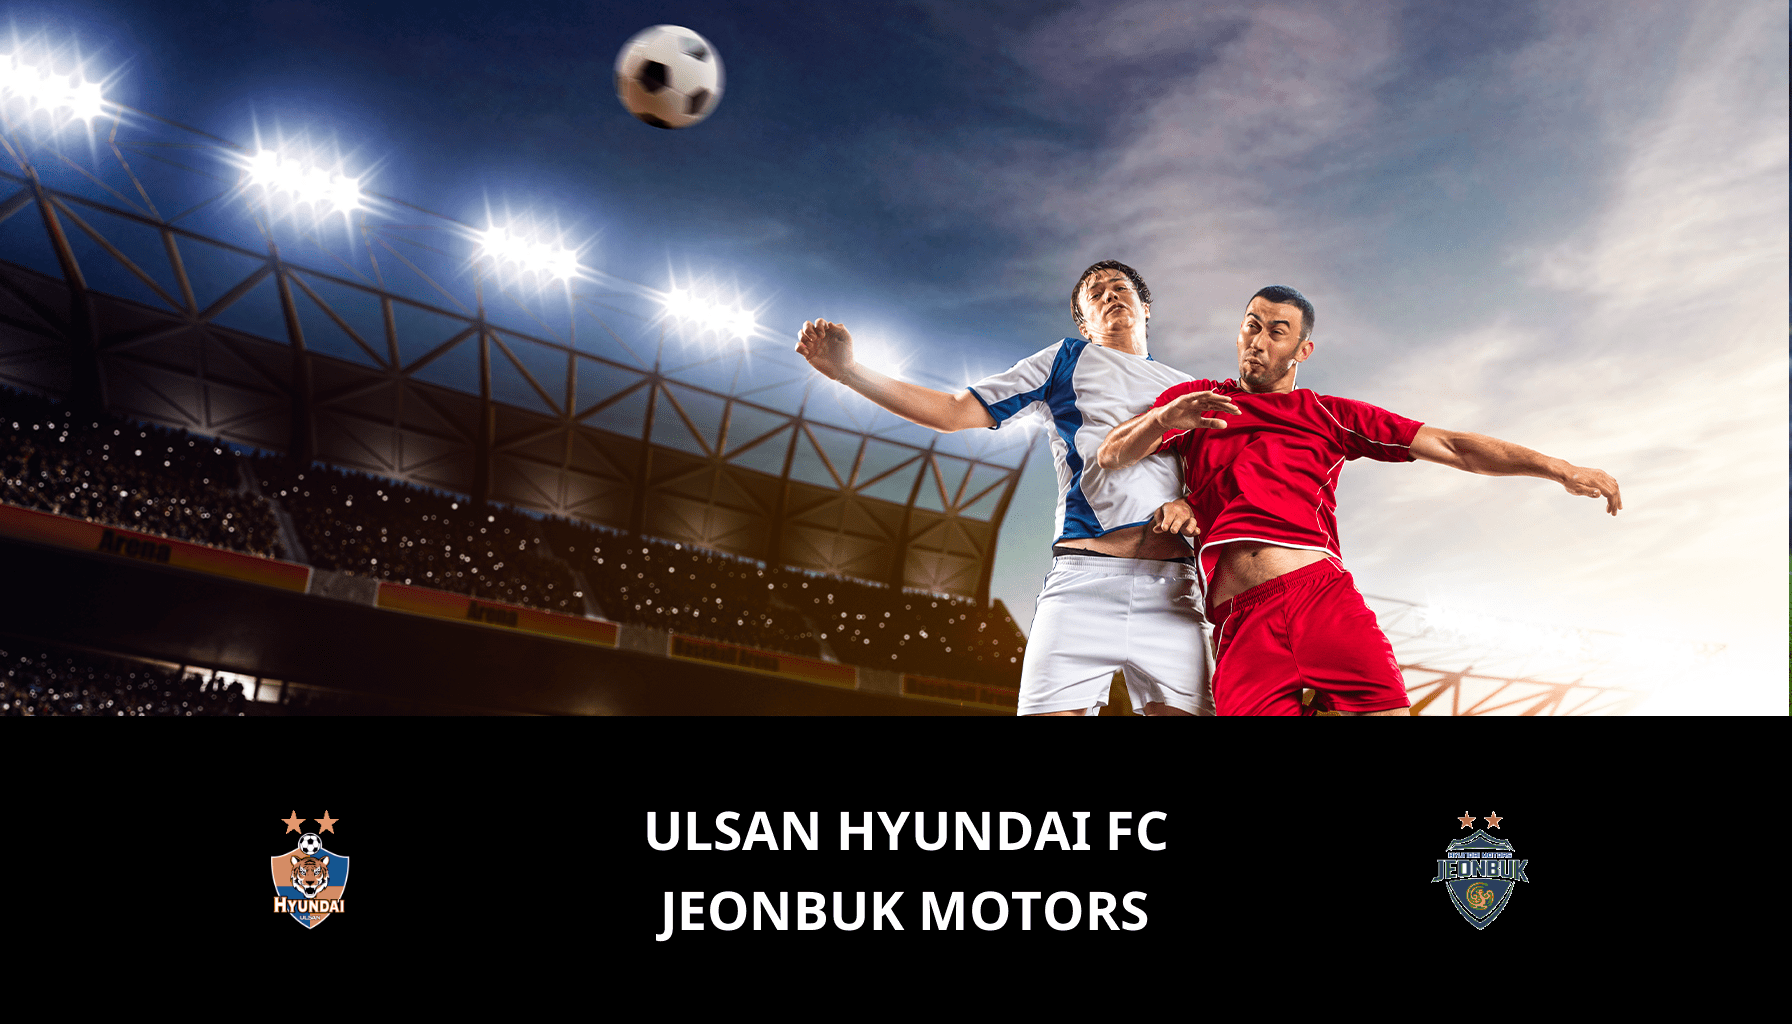 Previsione per Ulsan Hyundai FC VS Jeonbuk Motors il 03/12/2023 Analysis of the match